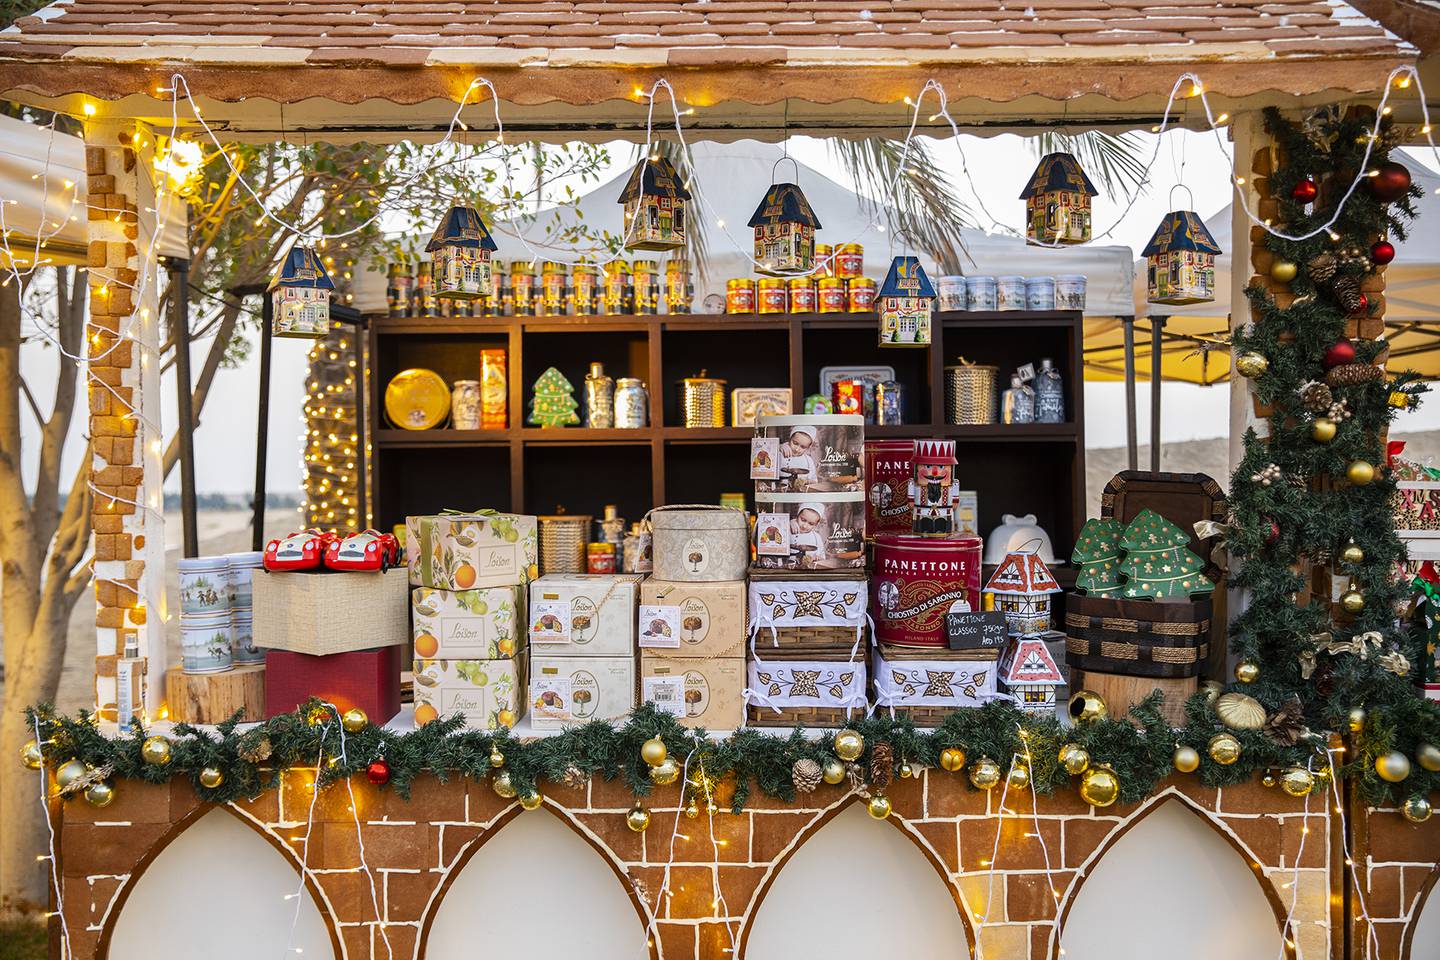 Visitors can pick up festive goodies at Bab Al Shams' desert-themed market. Photo: Bab Al Shams